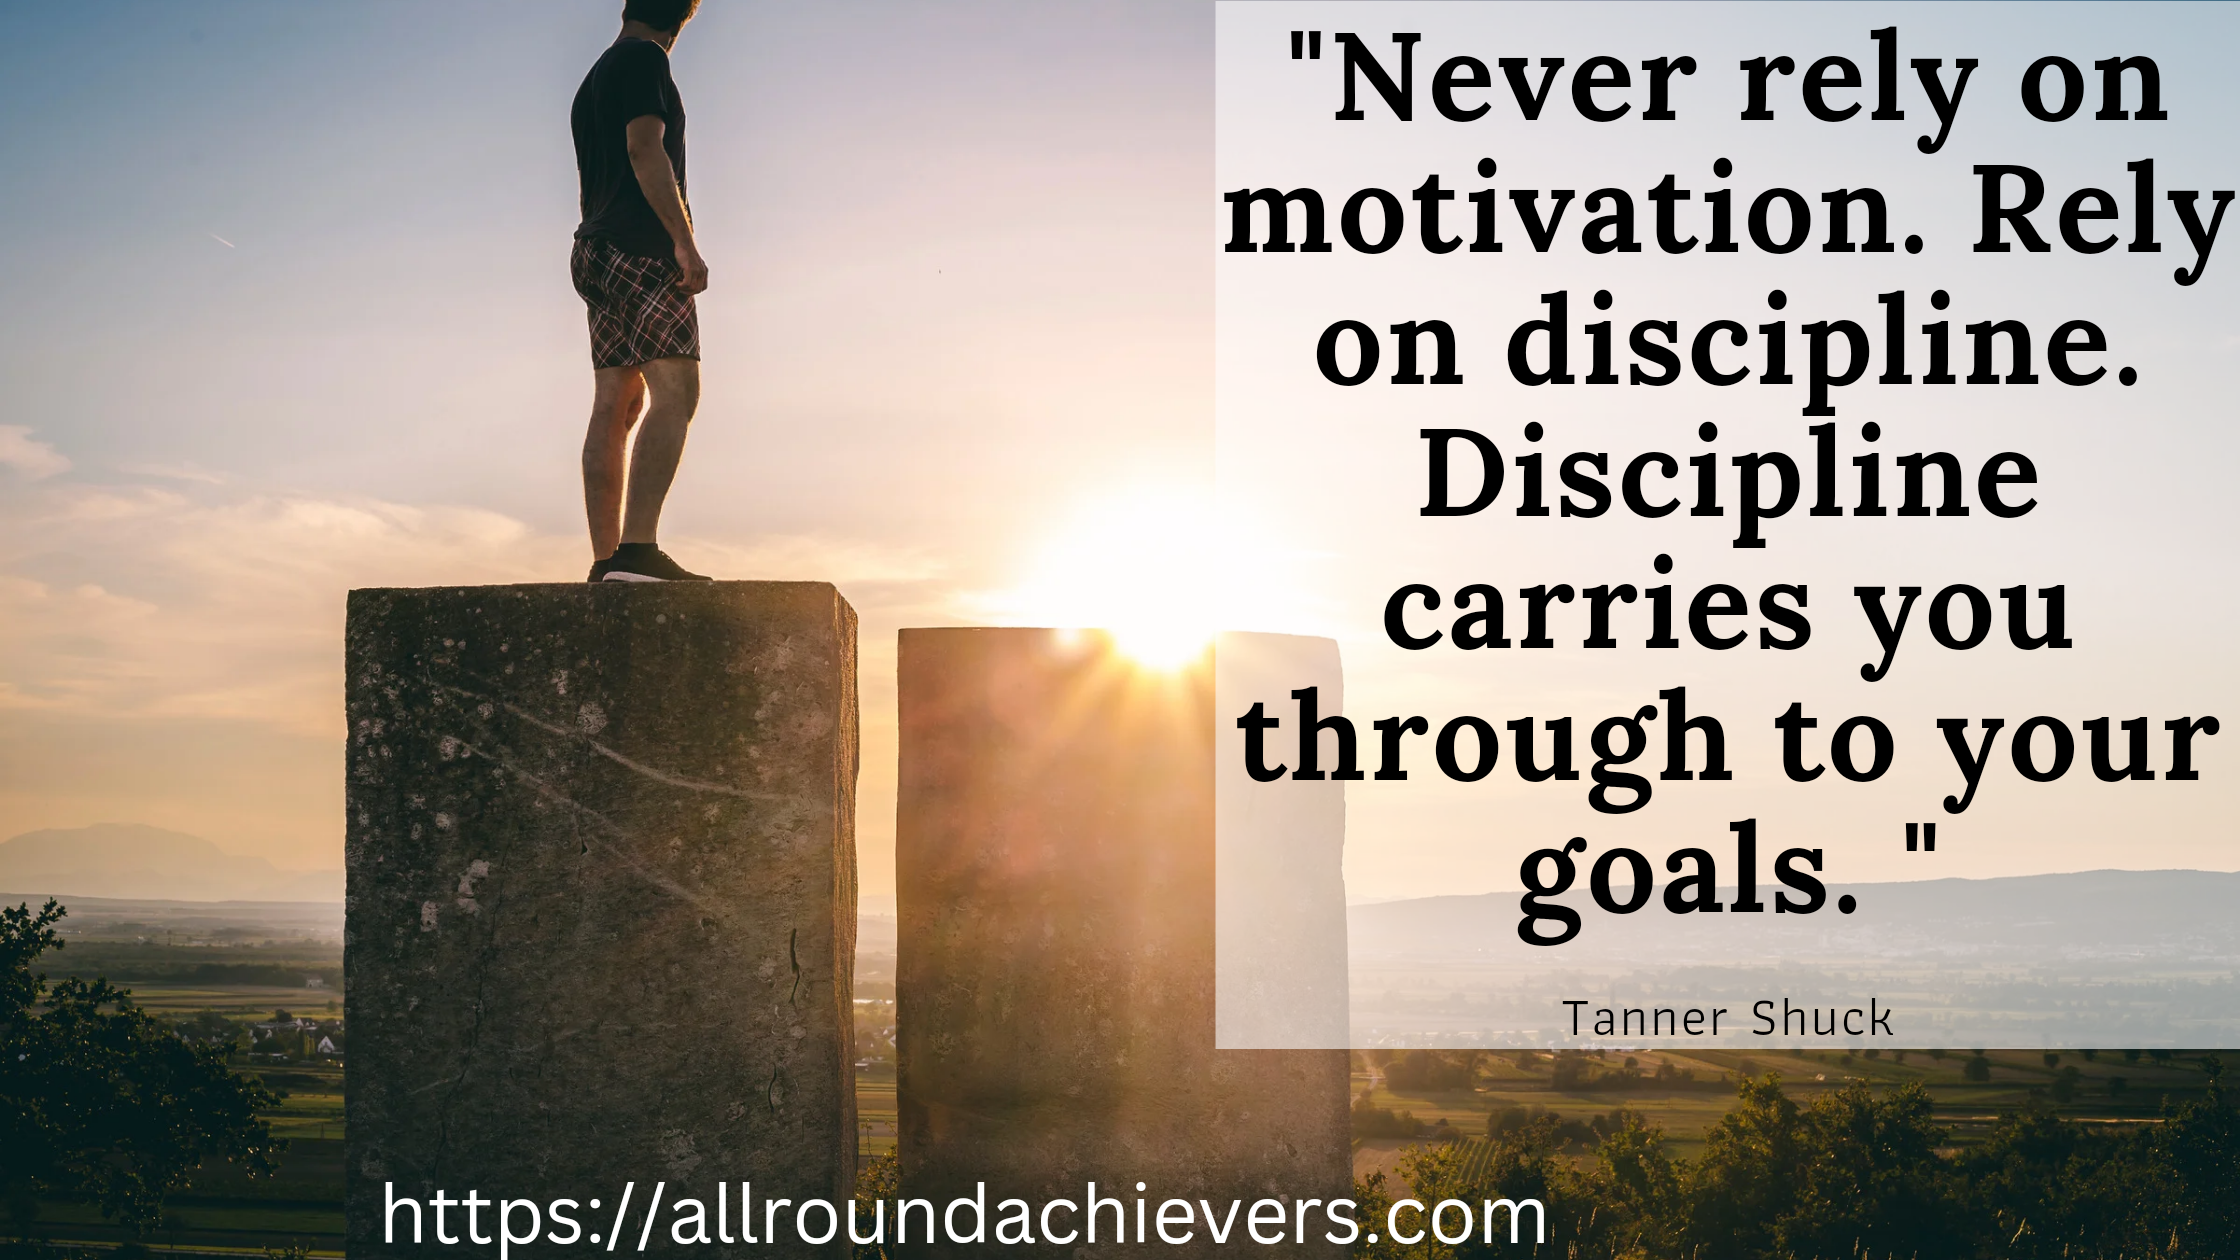 Motivation and discipline